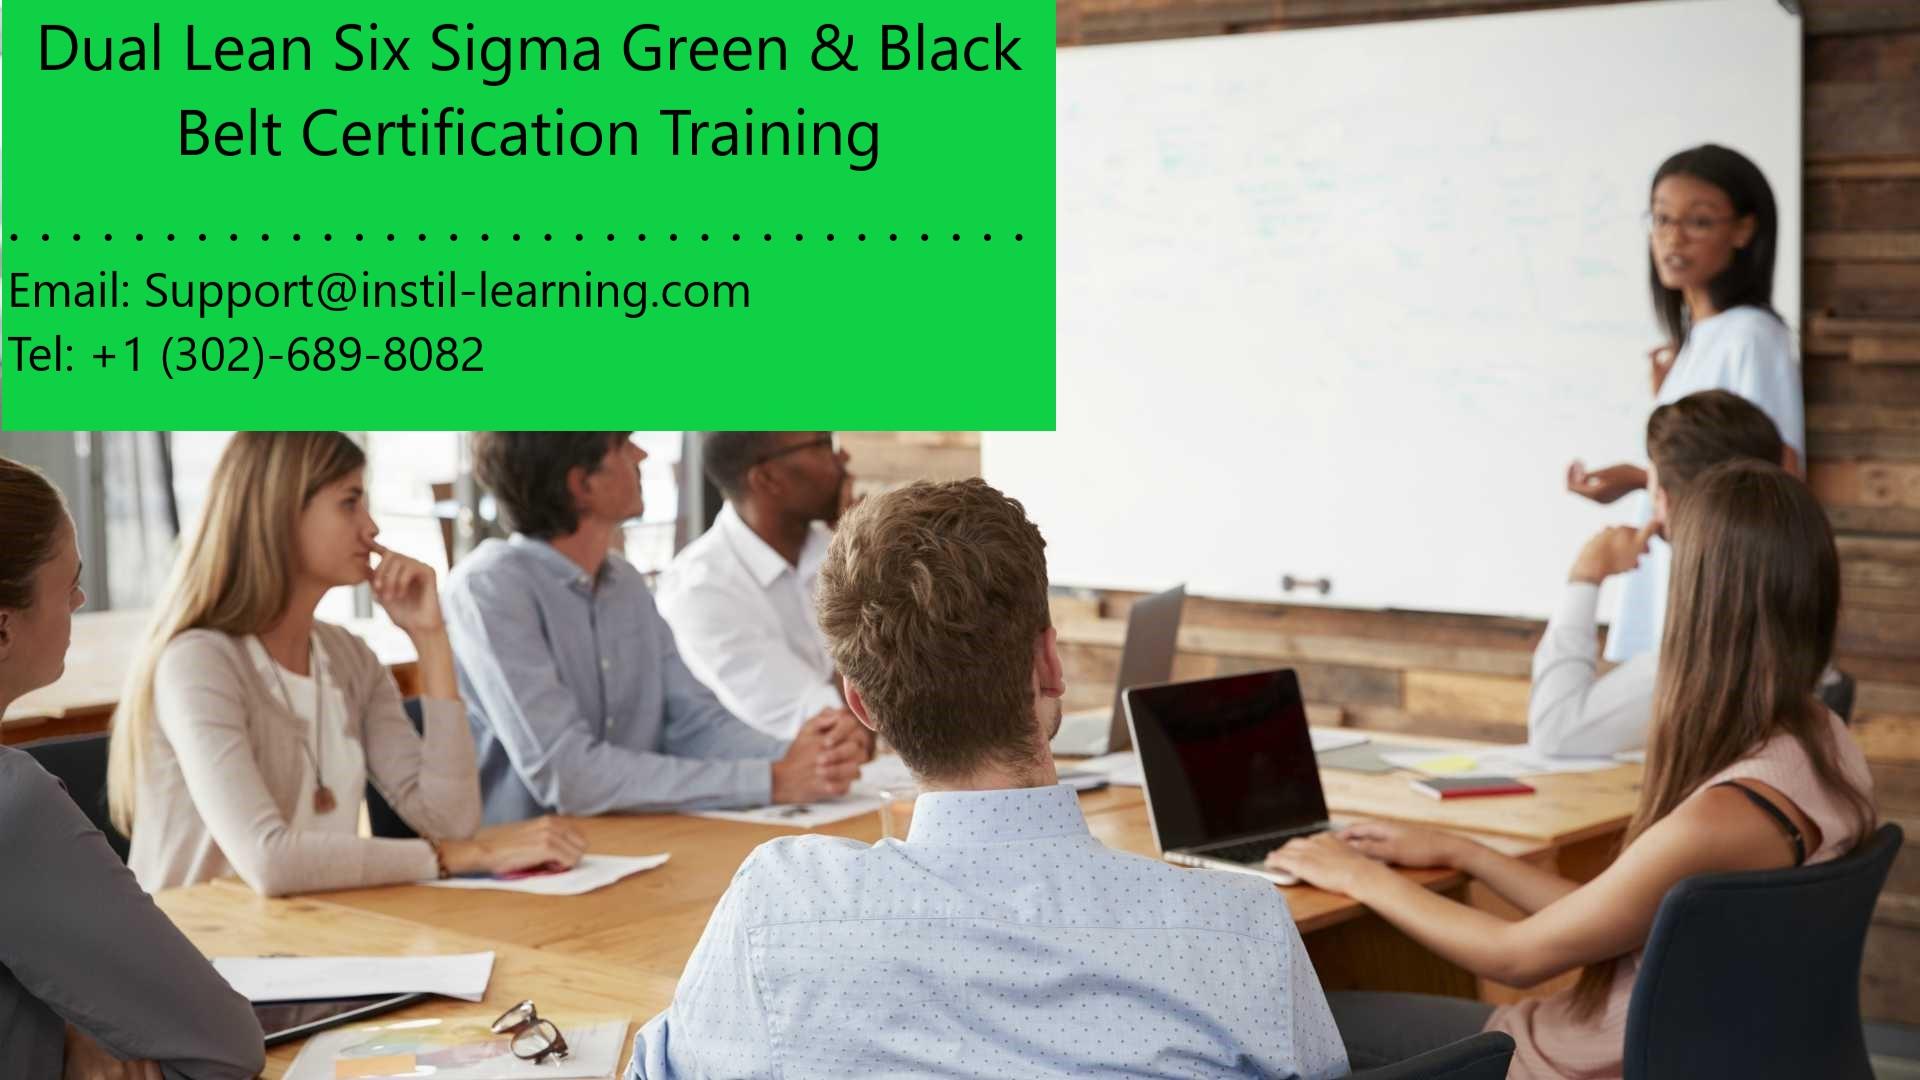 Dual Lean Six Sigma Green & Black Belt Training in Scranton, PA